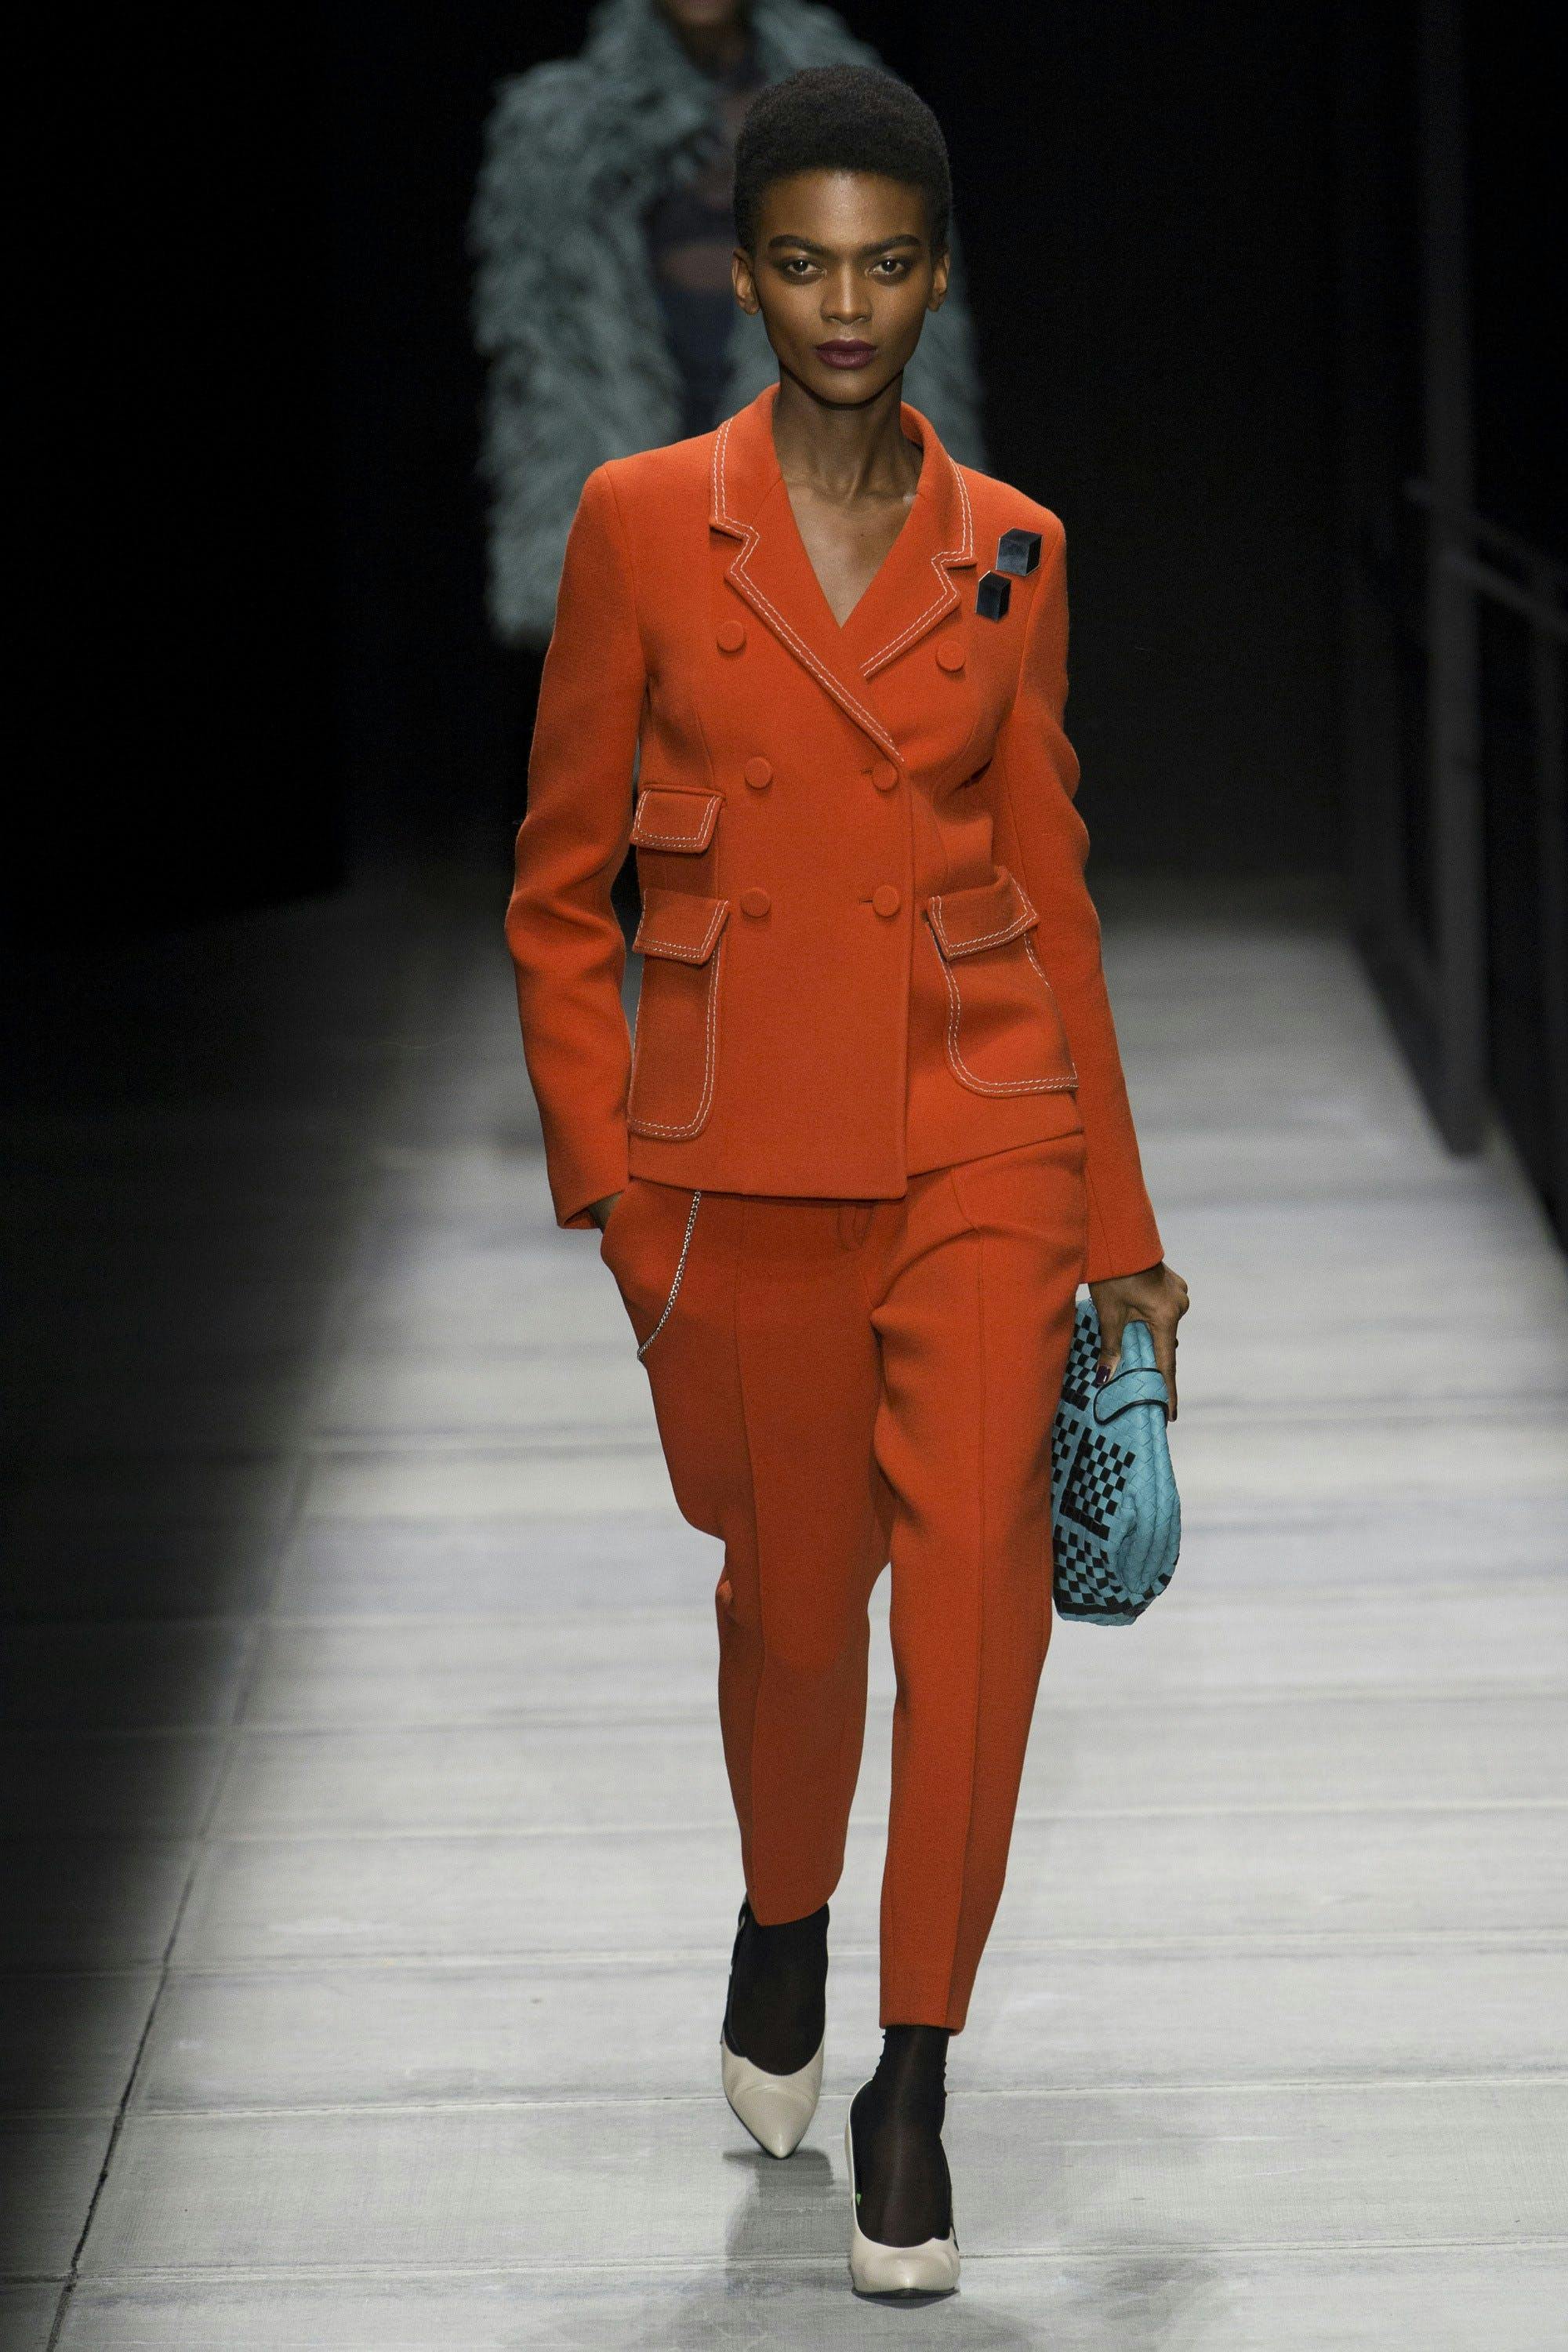 coat clothing apparel person human suit overcoat runway